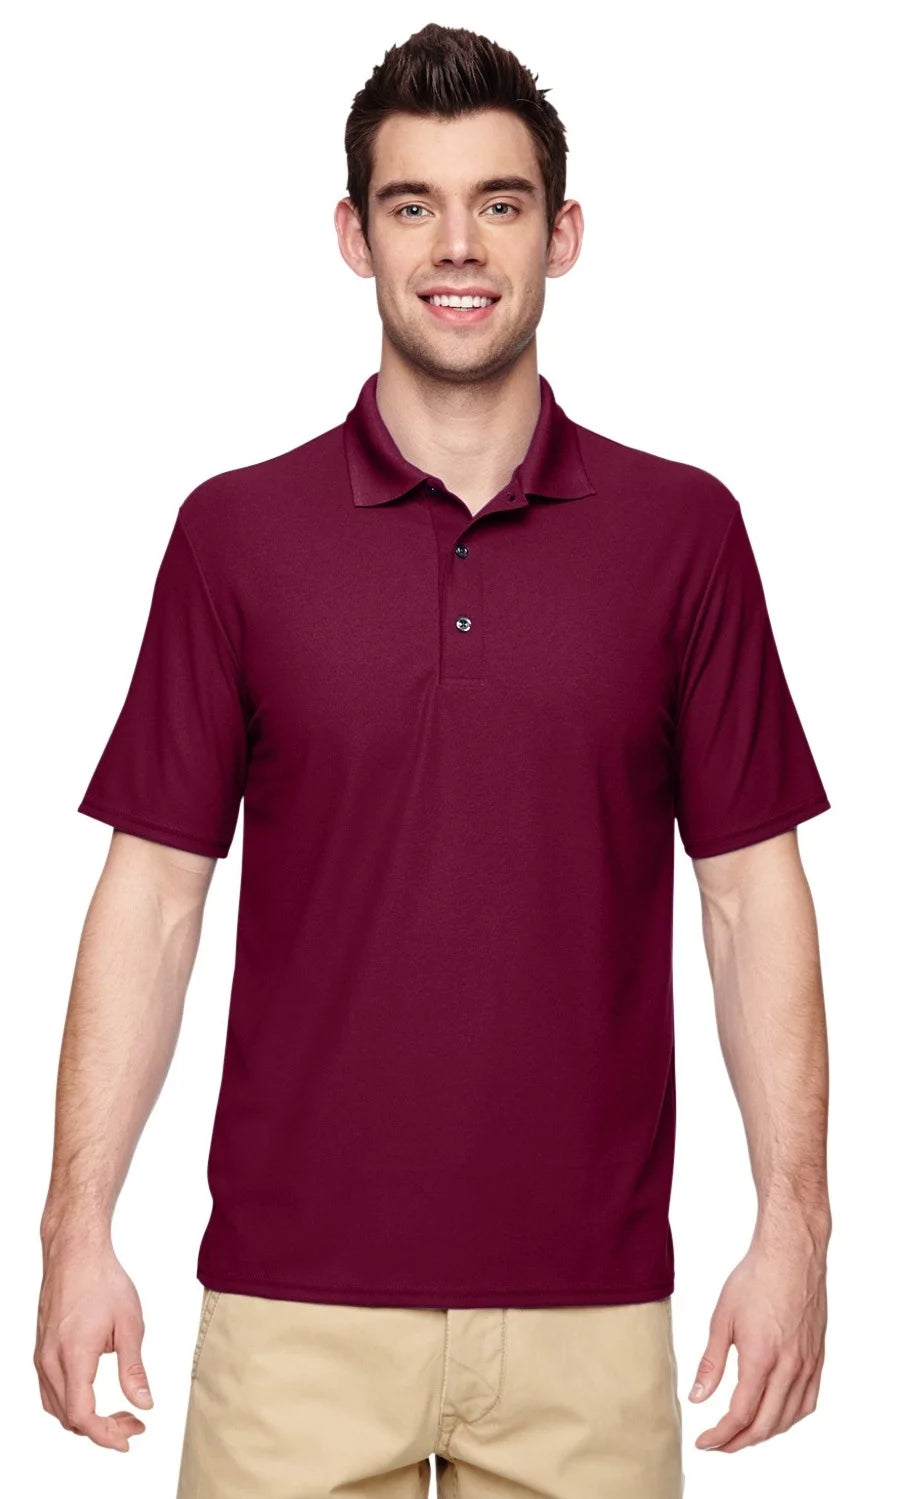 FOTL/Gildan Burgundy Polo Shirt - Adult Sizes S-3XL